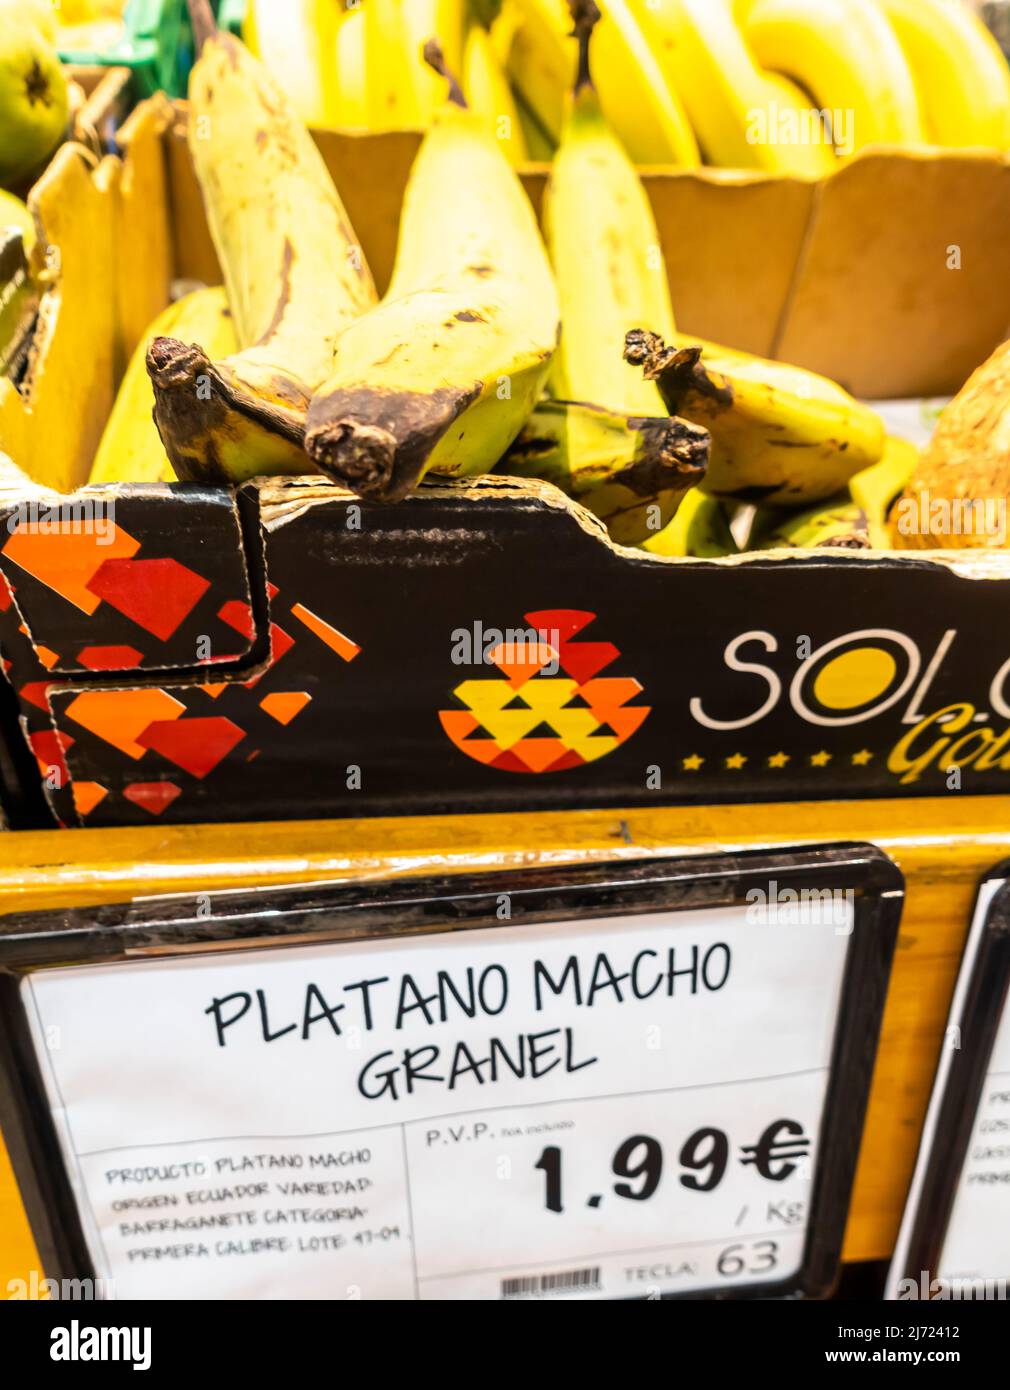 Platano macho granel Banana bananas with price tag stall on sale in MAS supermarket Seville Stock Photo